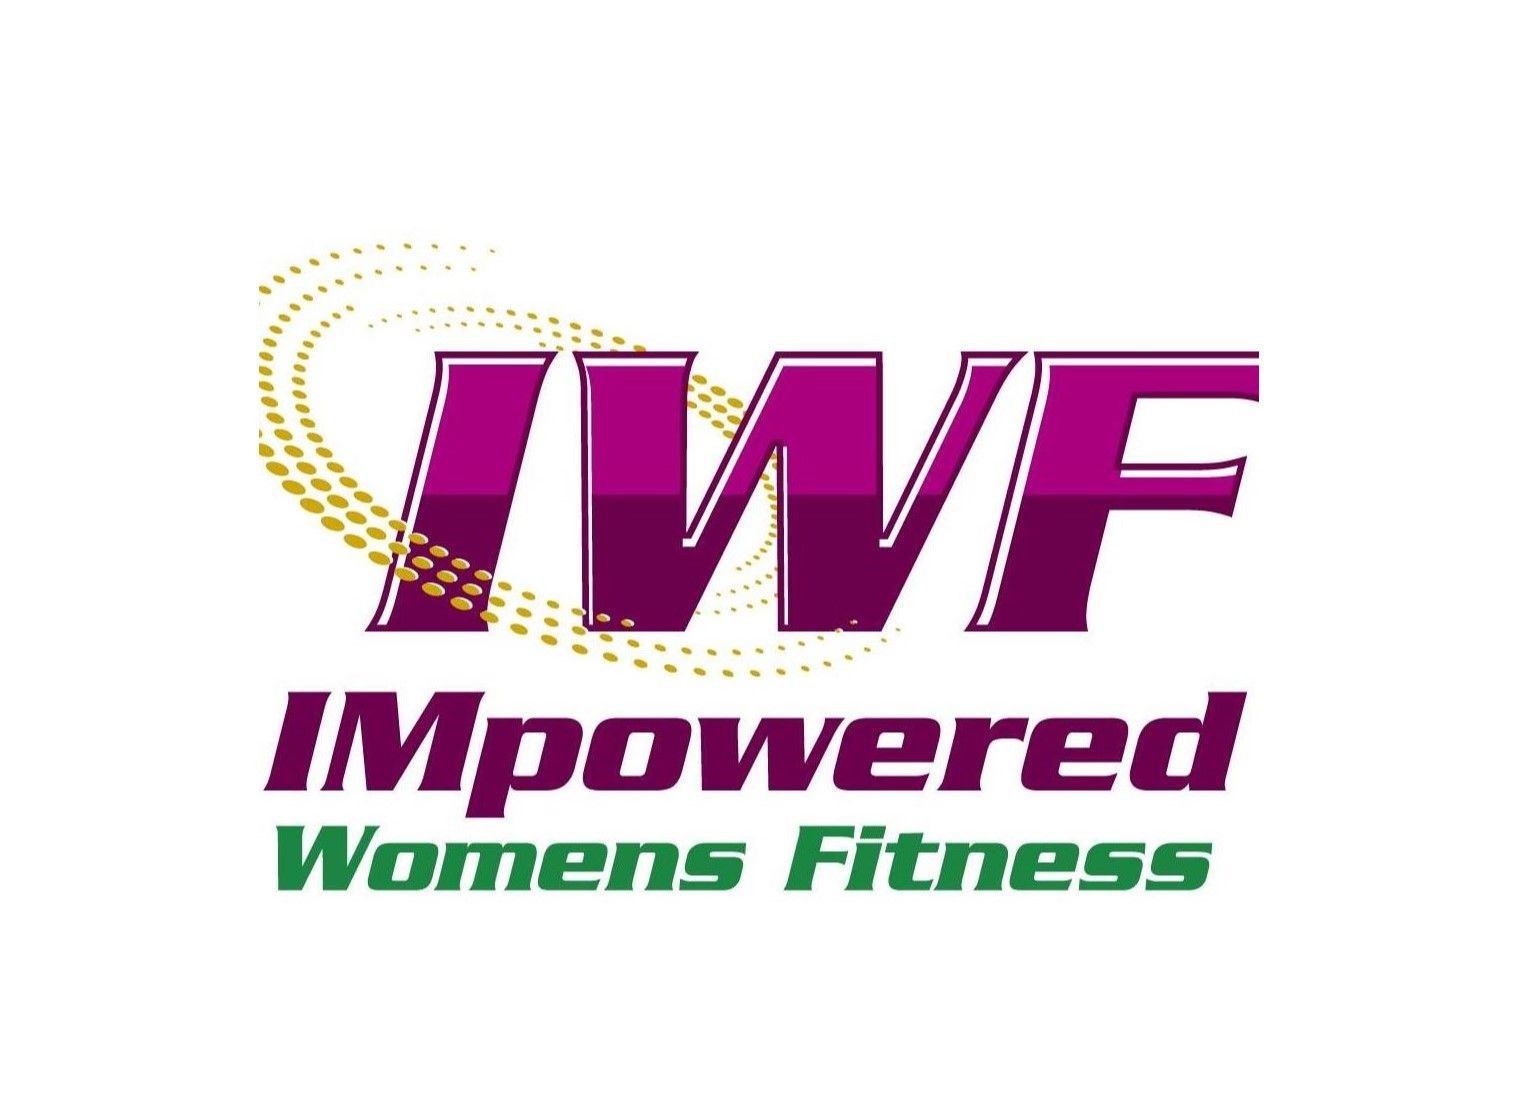 Celebrating the Power of Women - IMpoweredWomens Fitness